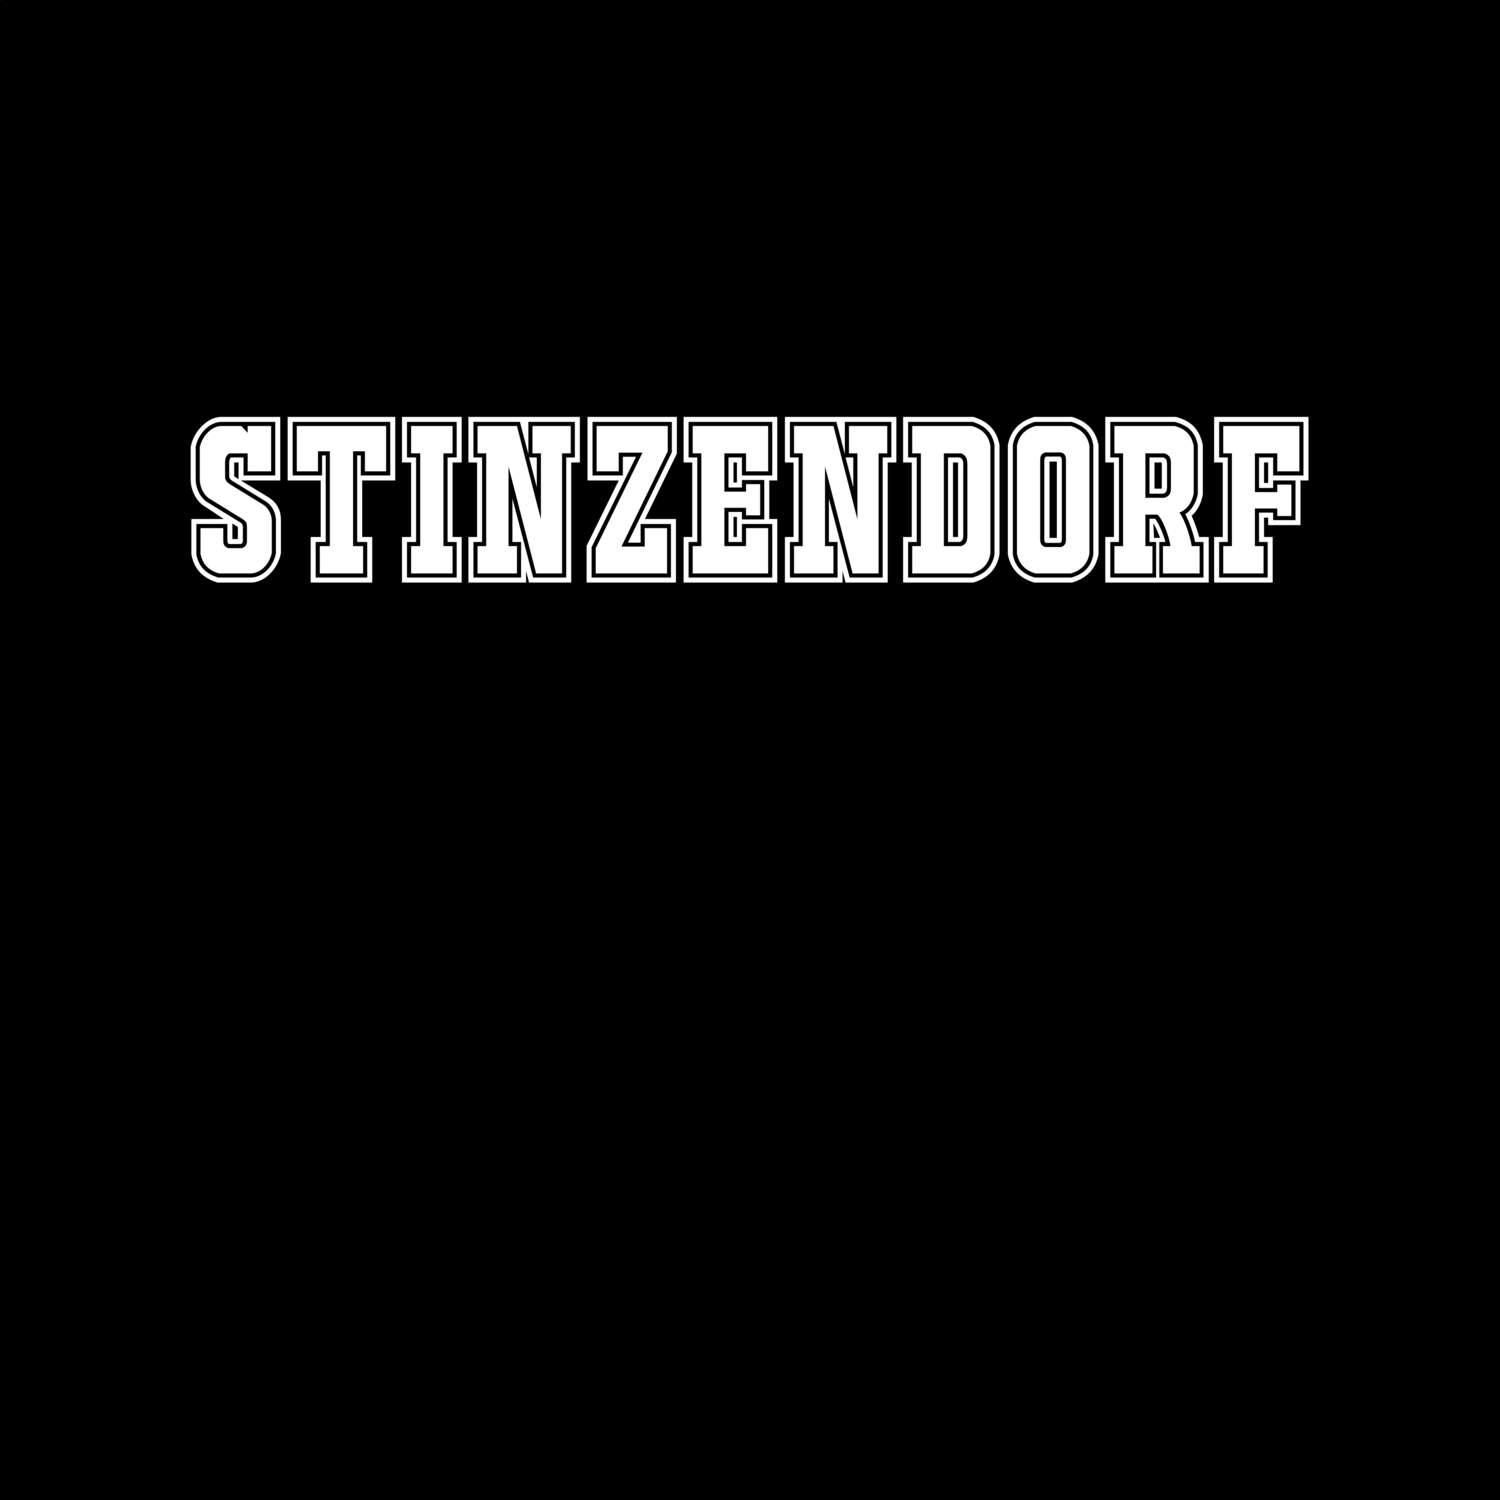 Stinzendorf T-Shirt »Classic«